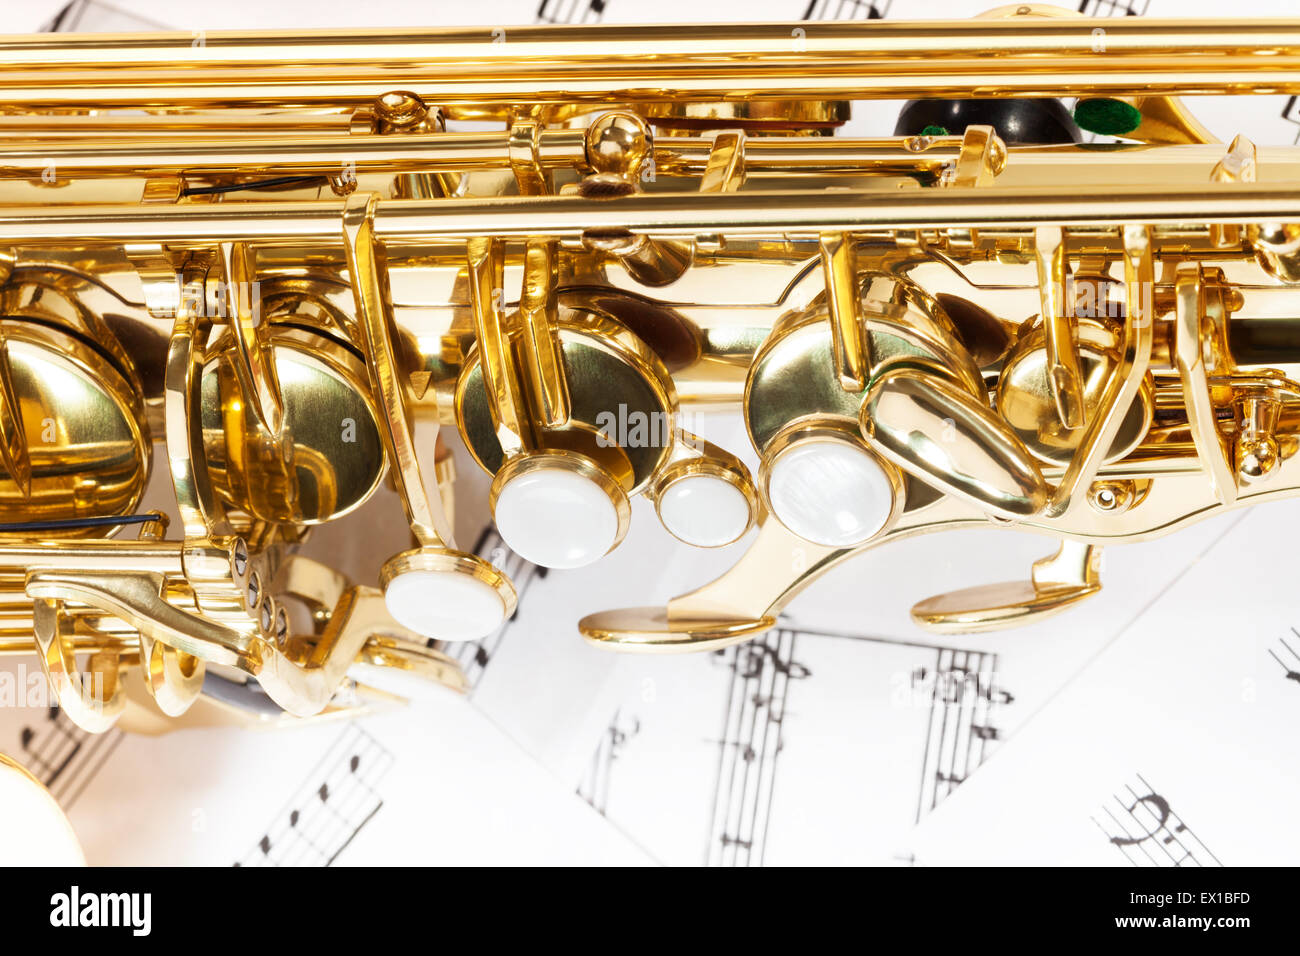 Shiny golden alto saxophone keys close-up view Stock Photo